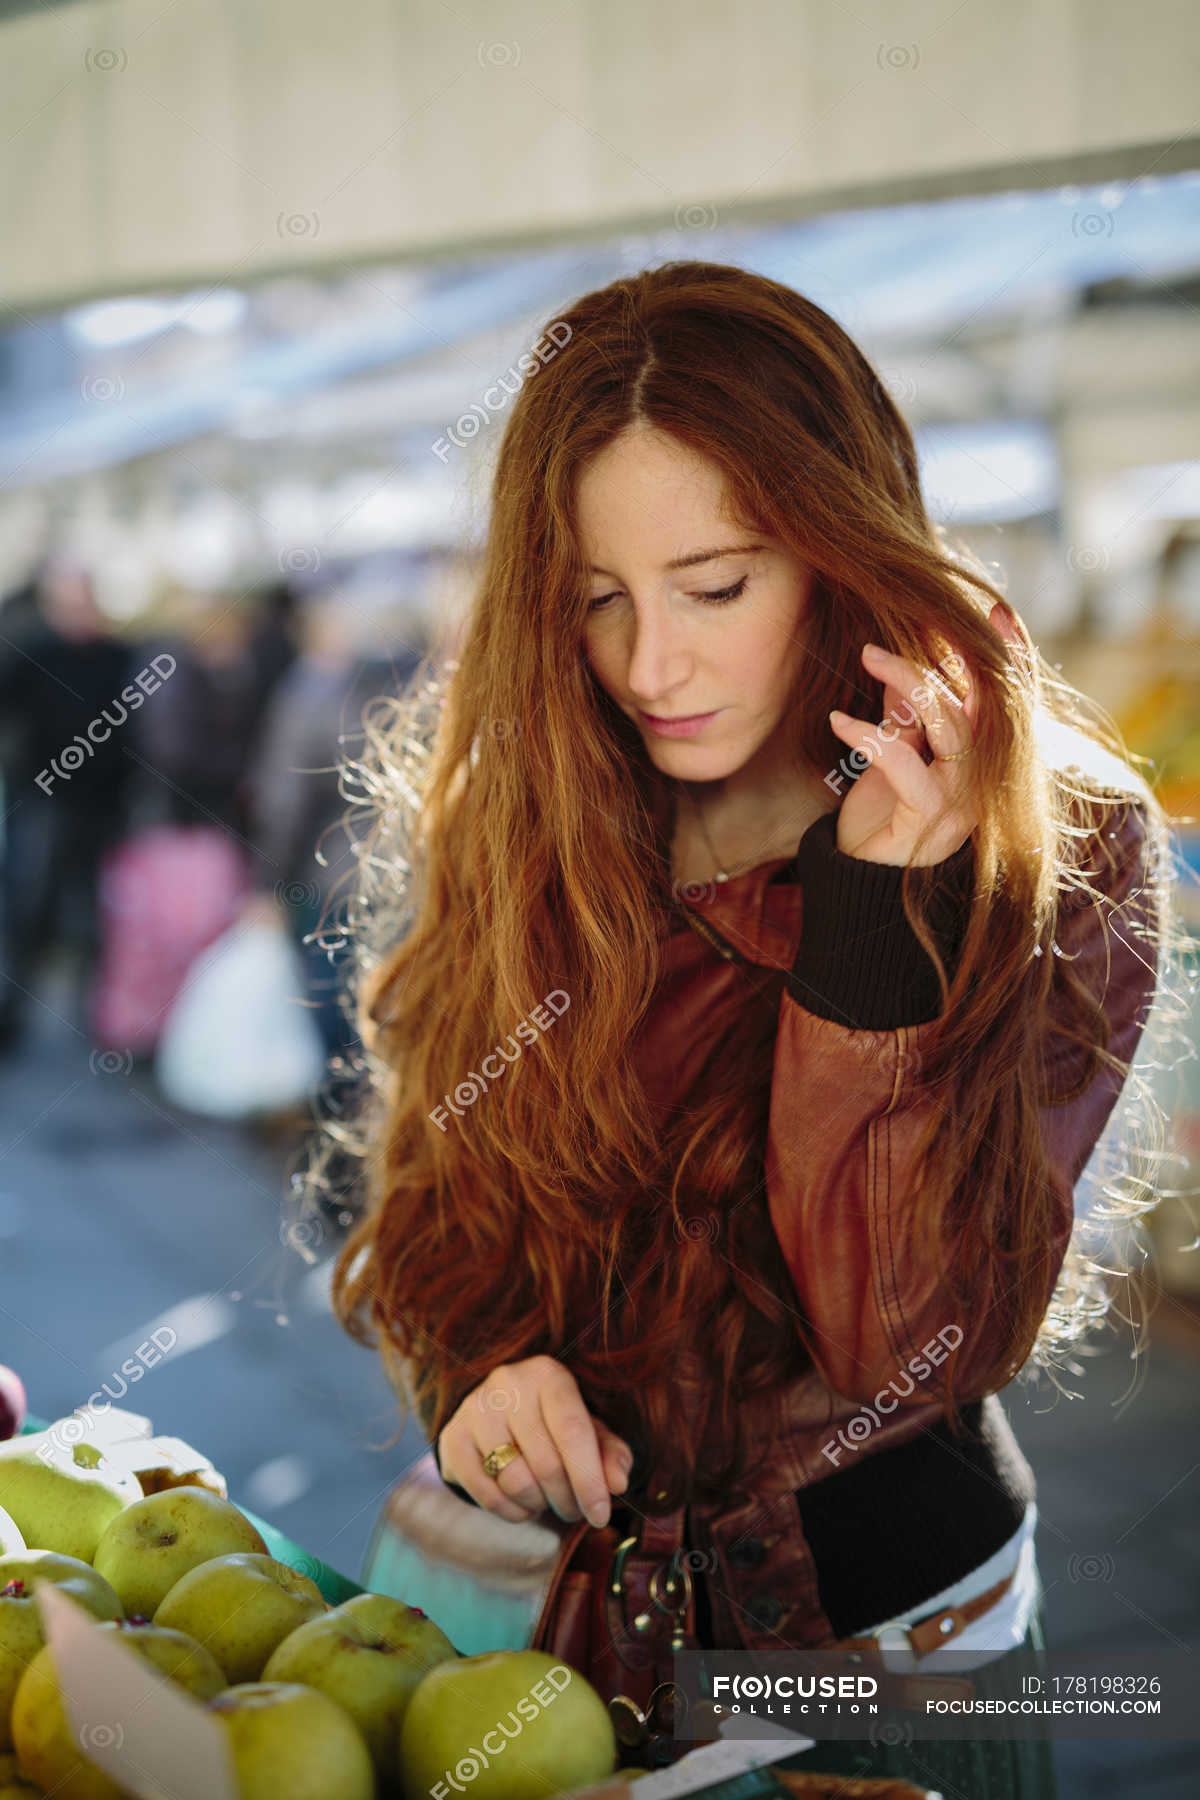 Redheaded Woman at fruit market — Stock Photo | #178198326